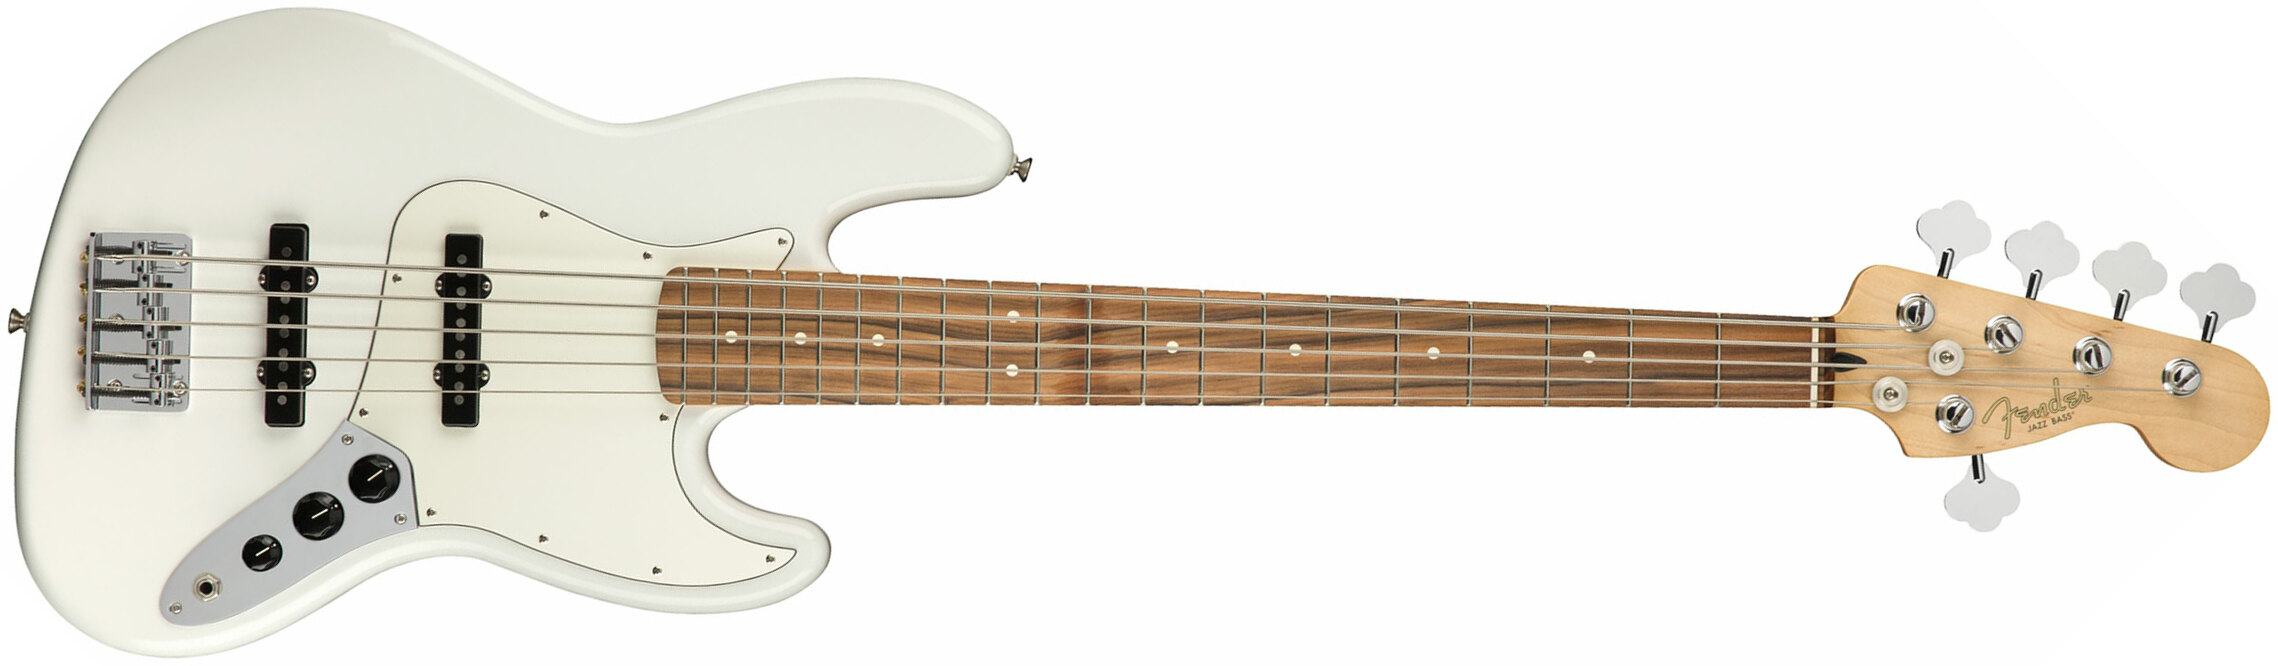 Fender Jazz Bass Player V 5-cordes Mex Pf - Polar White - Basse Électrique Solid Body - Main picture